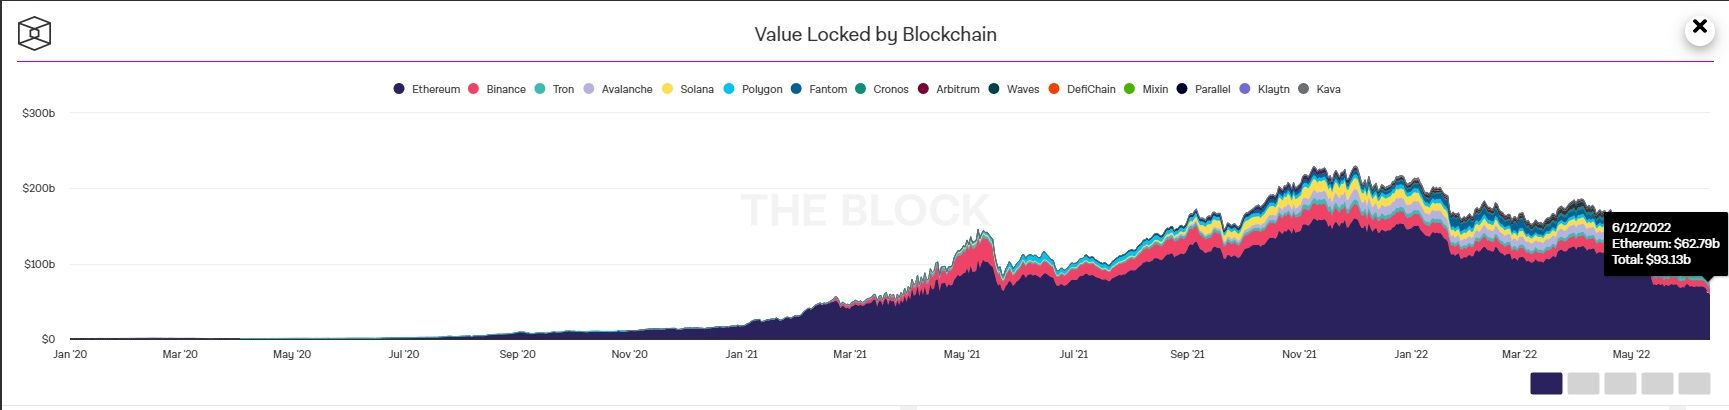 ethereum locked value chart june 2022